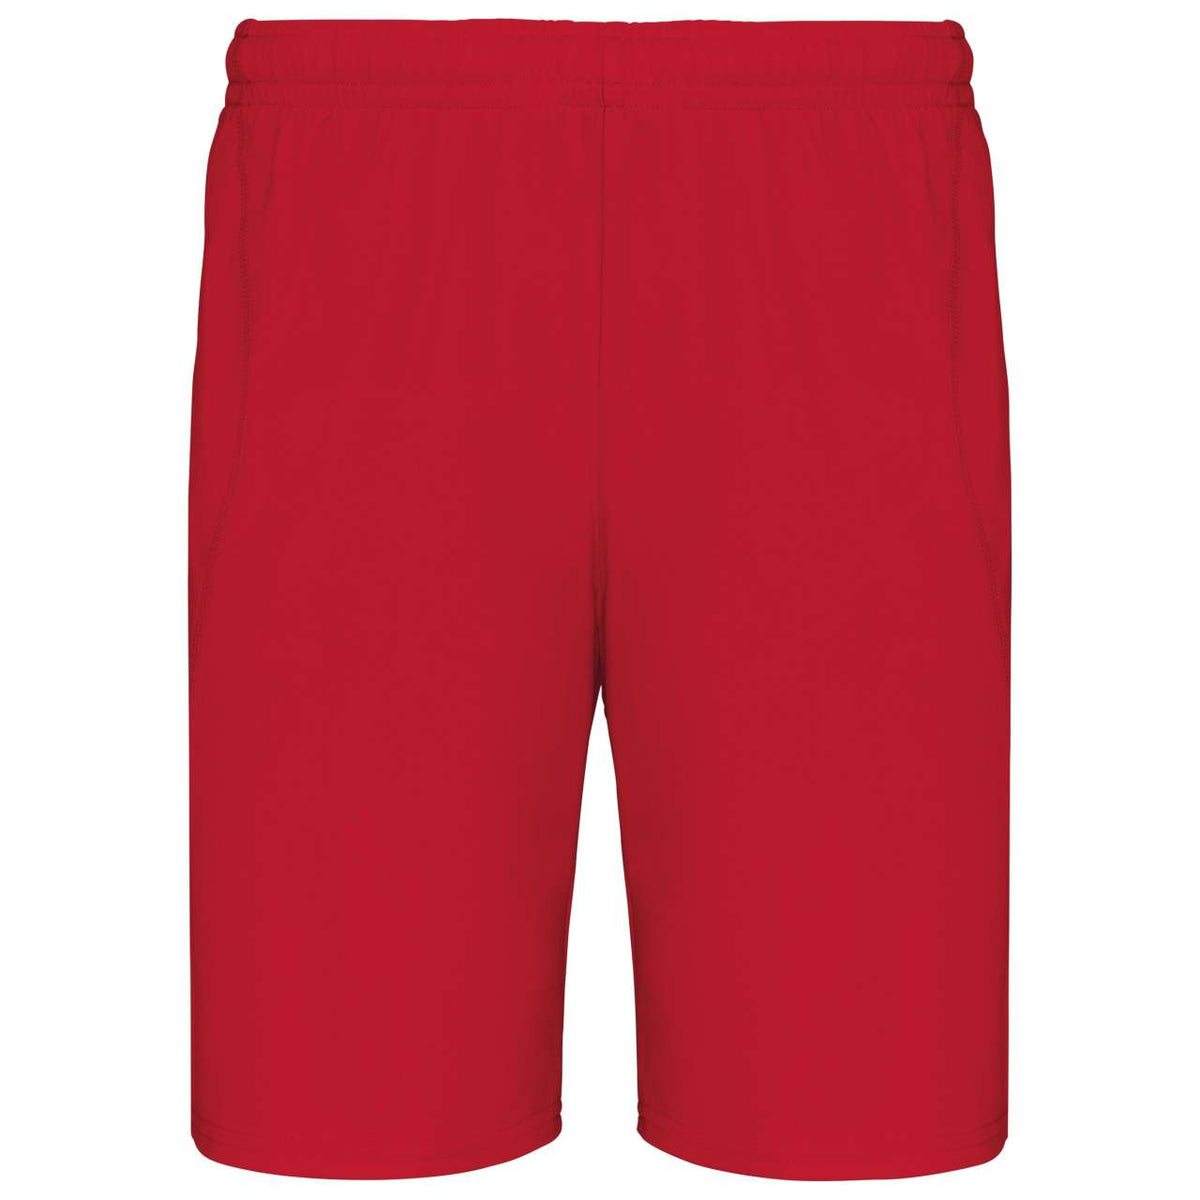 Proact Herren Sport Shorts Sporthose Kurzhose Bermuda Jogginghose